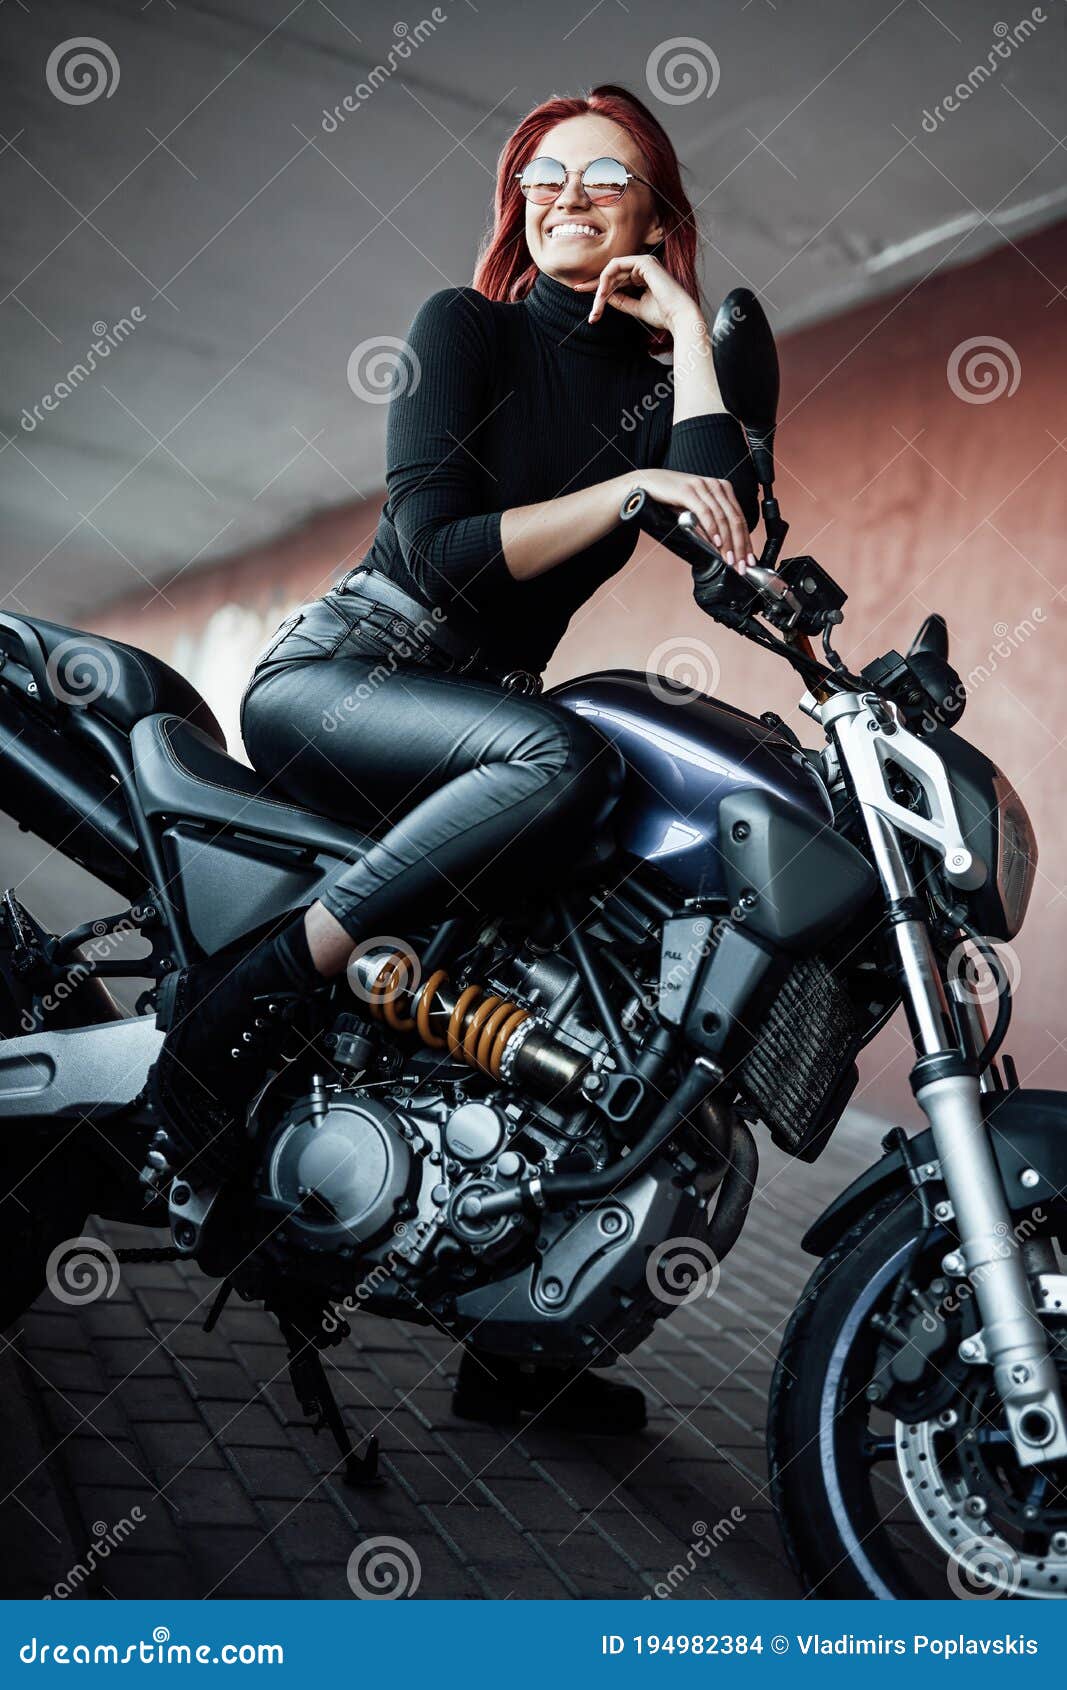 dan monica add photo pictures of biker woman